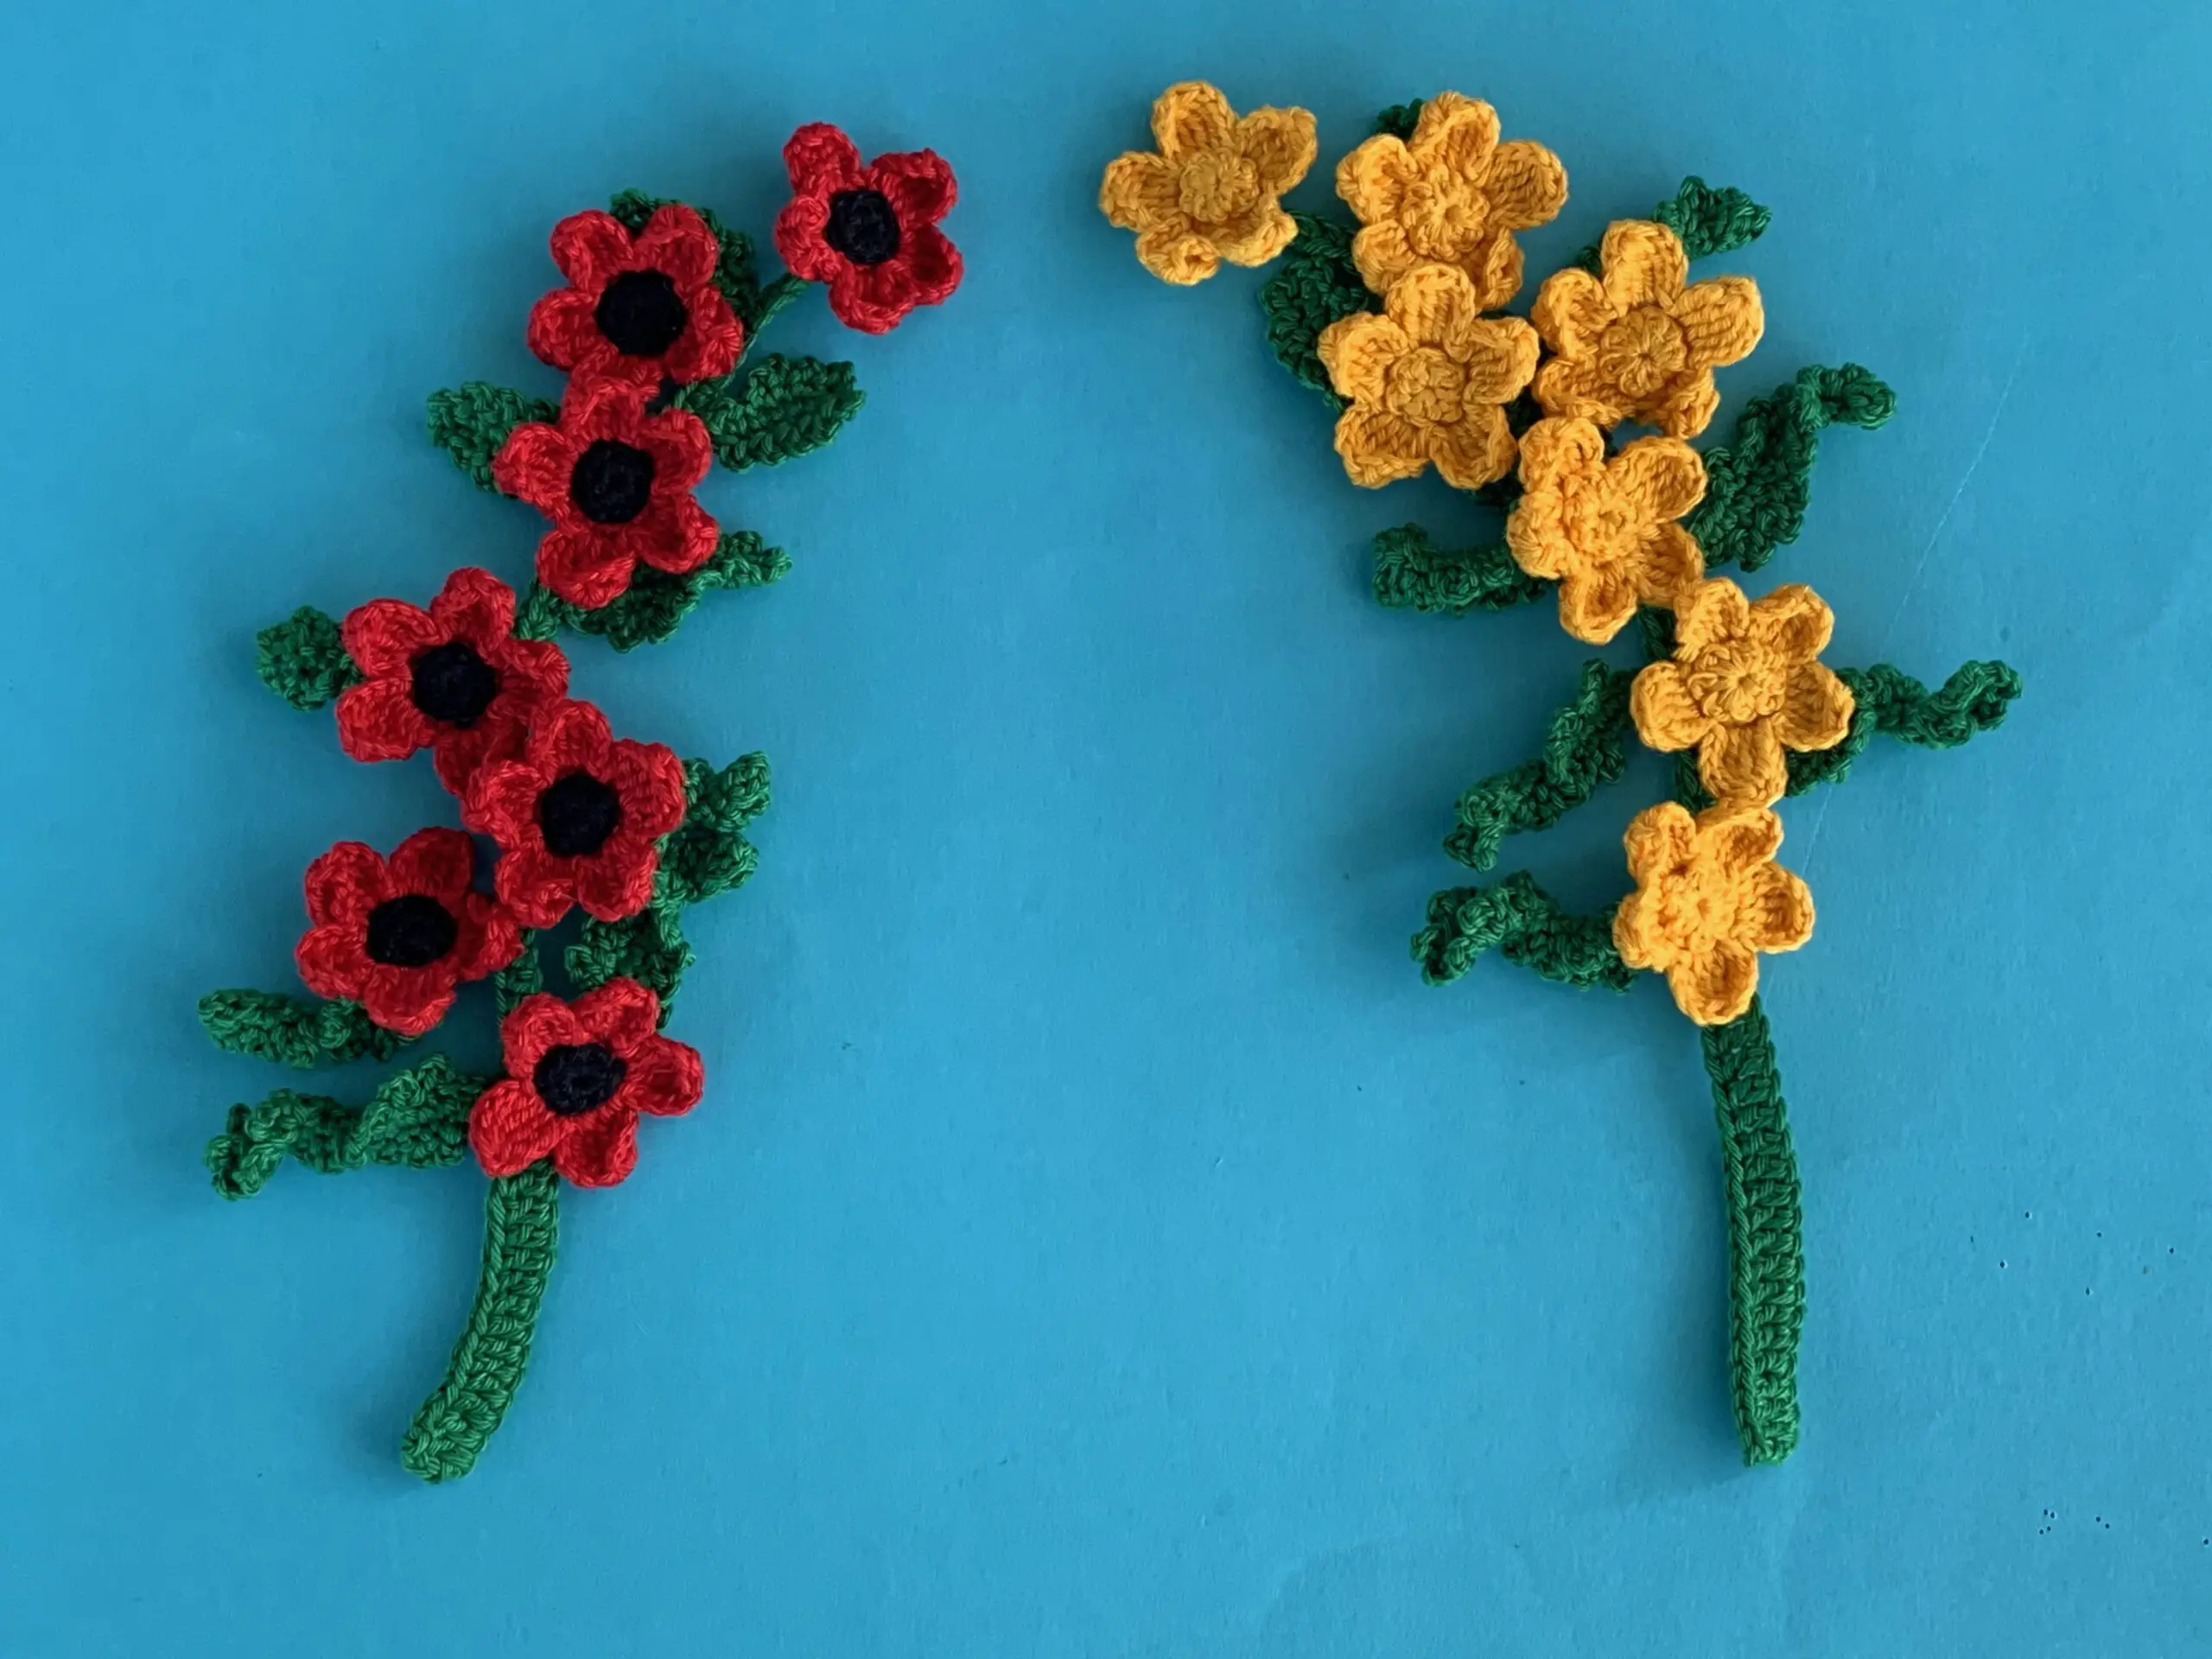 Finished crochet flower 4 ply landscape